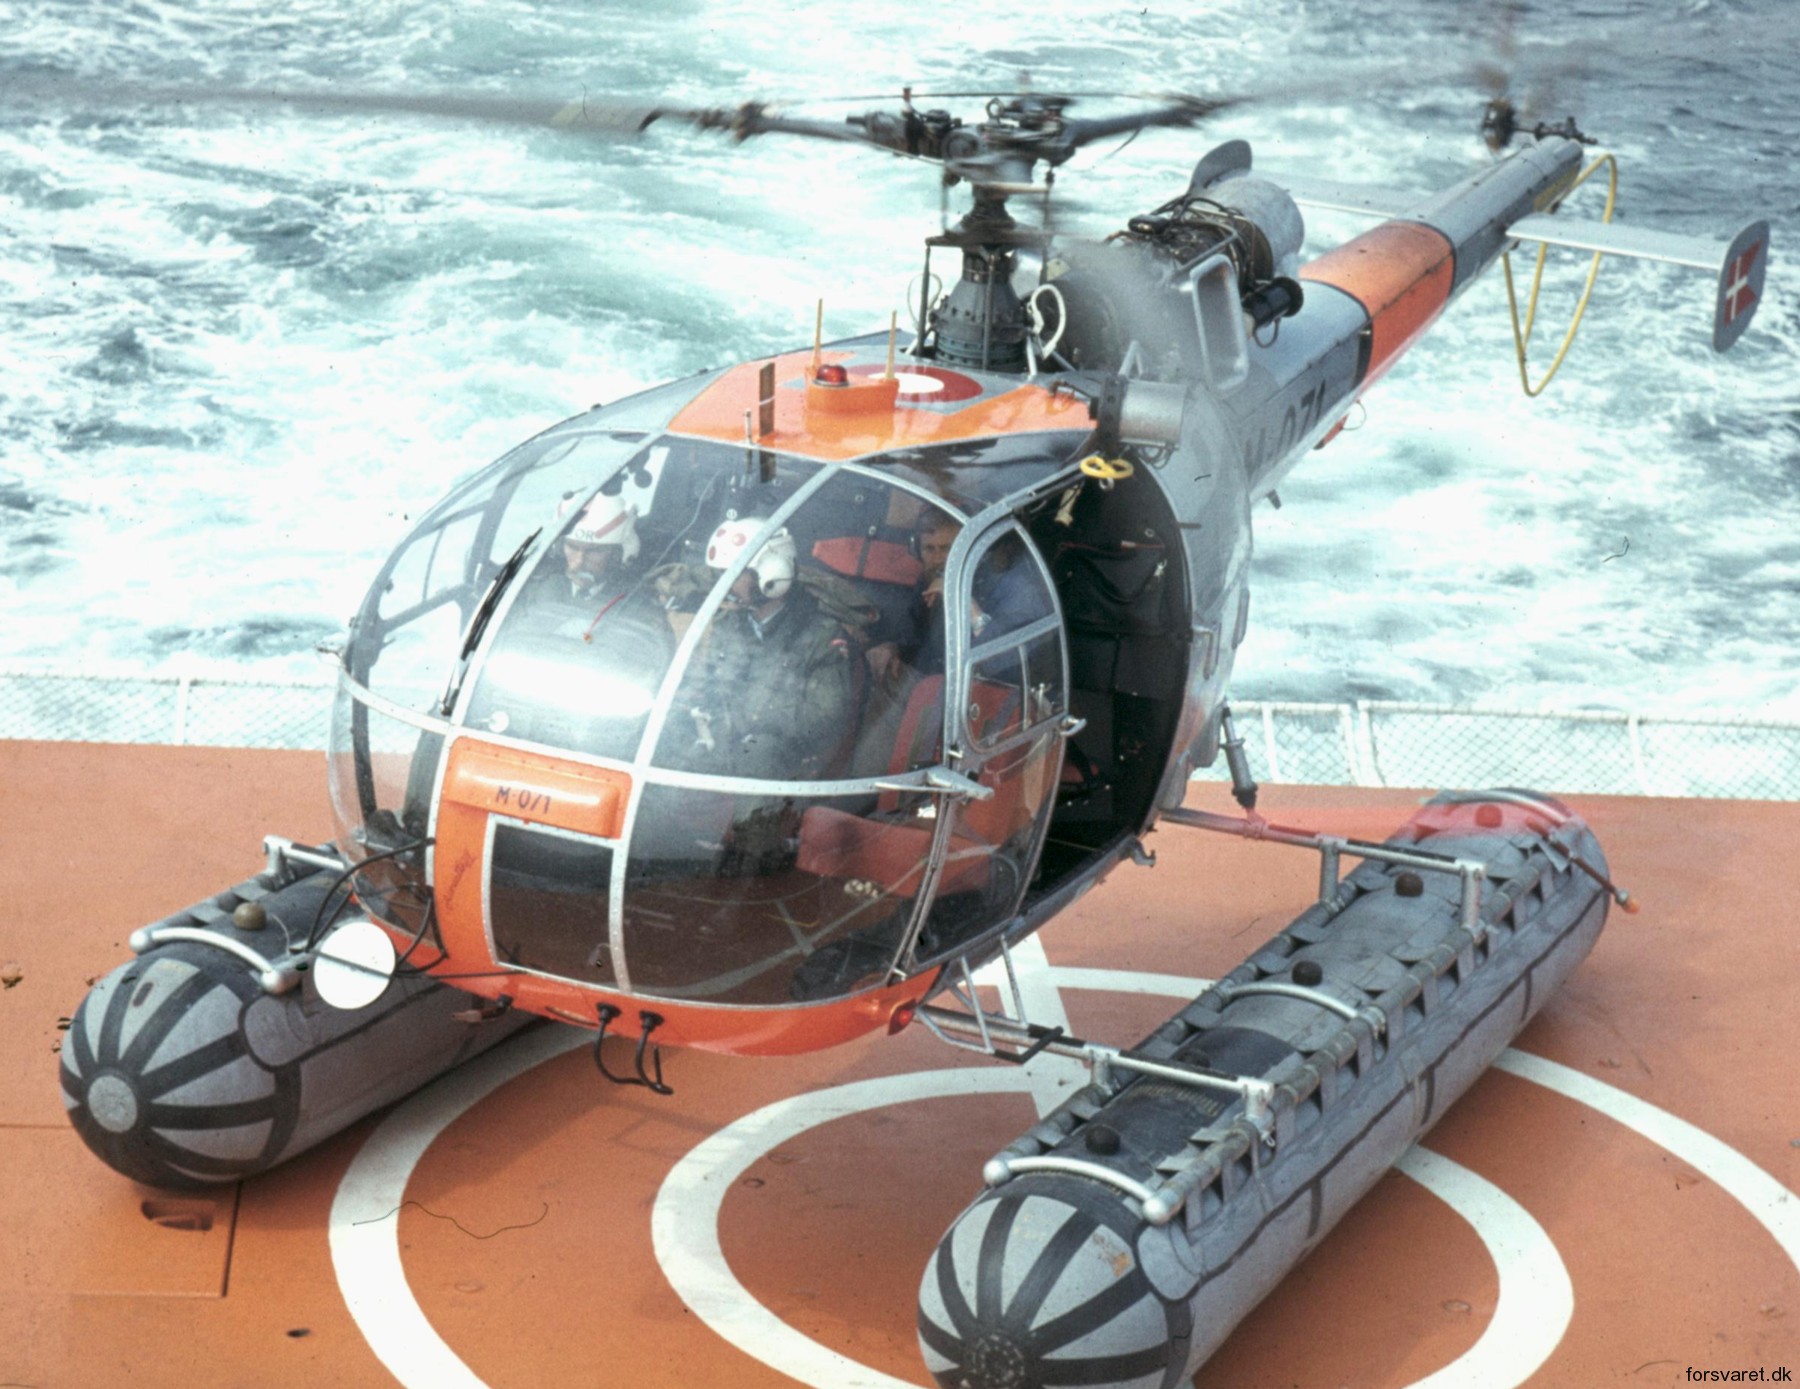 sa 316b alouette iii helicopter royal danish navy søværnet kongelige danske marine sud aviation m-071 06